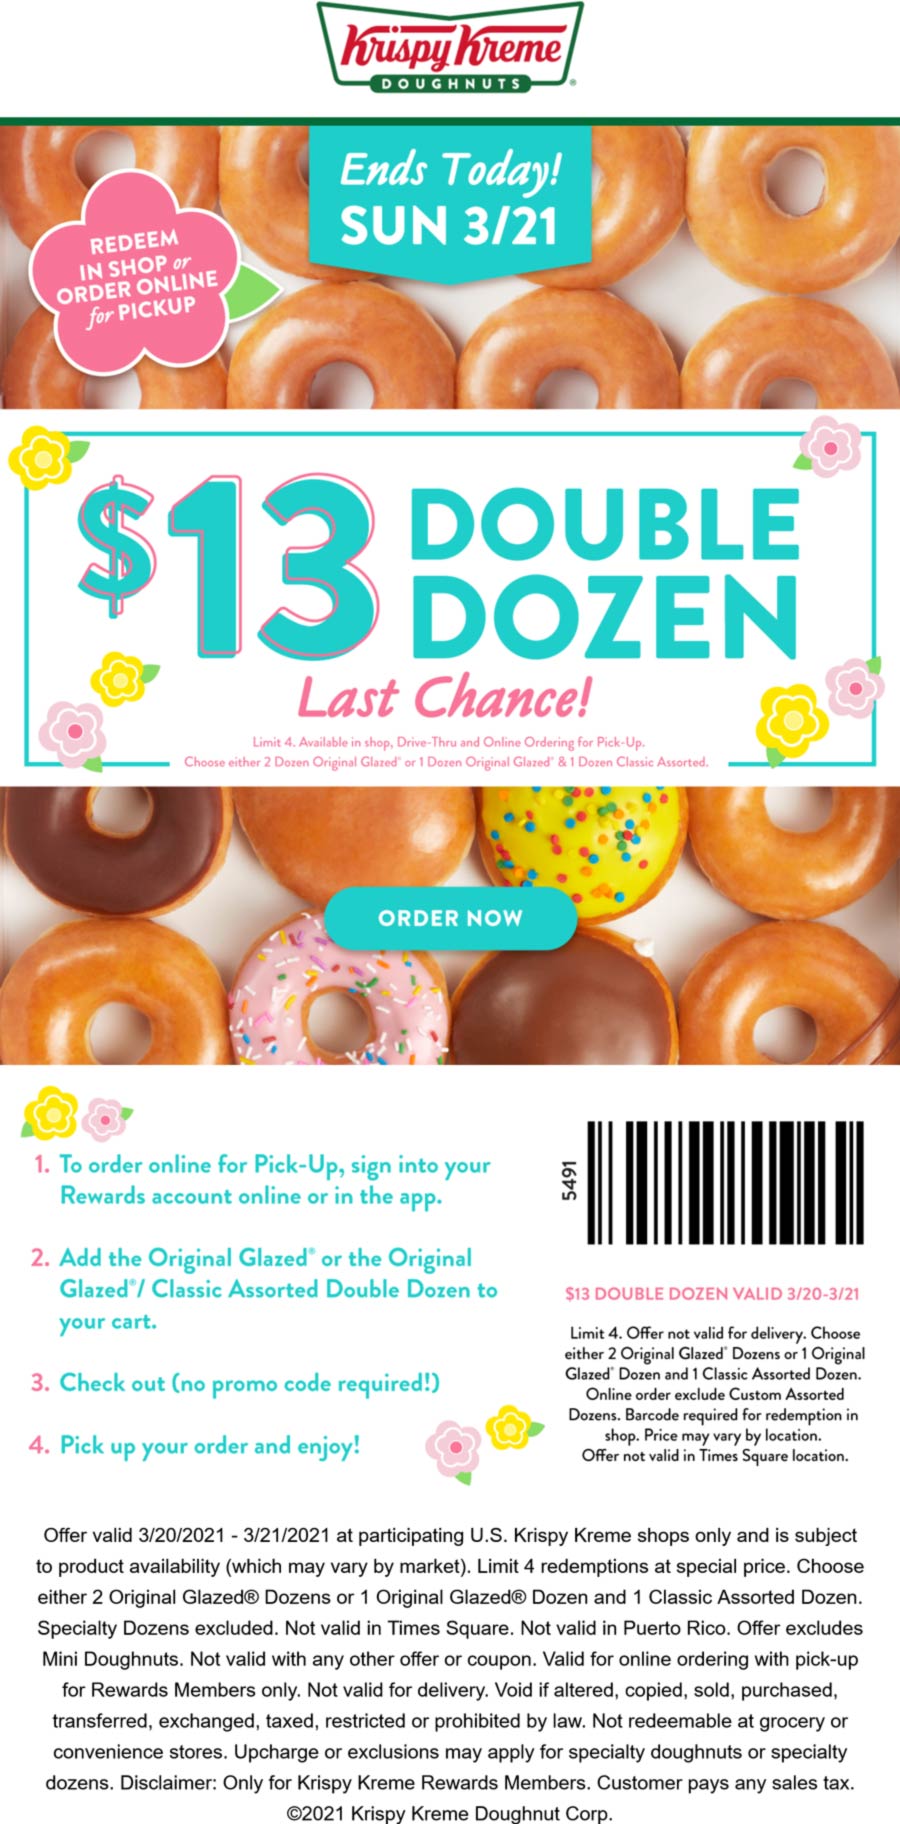 Krispy Kreme restaurants Coupon  $13 double dozen doughnuts today at Krispy Kreme #krispykreme 